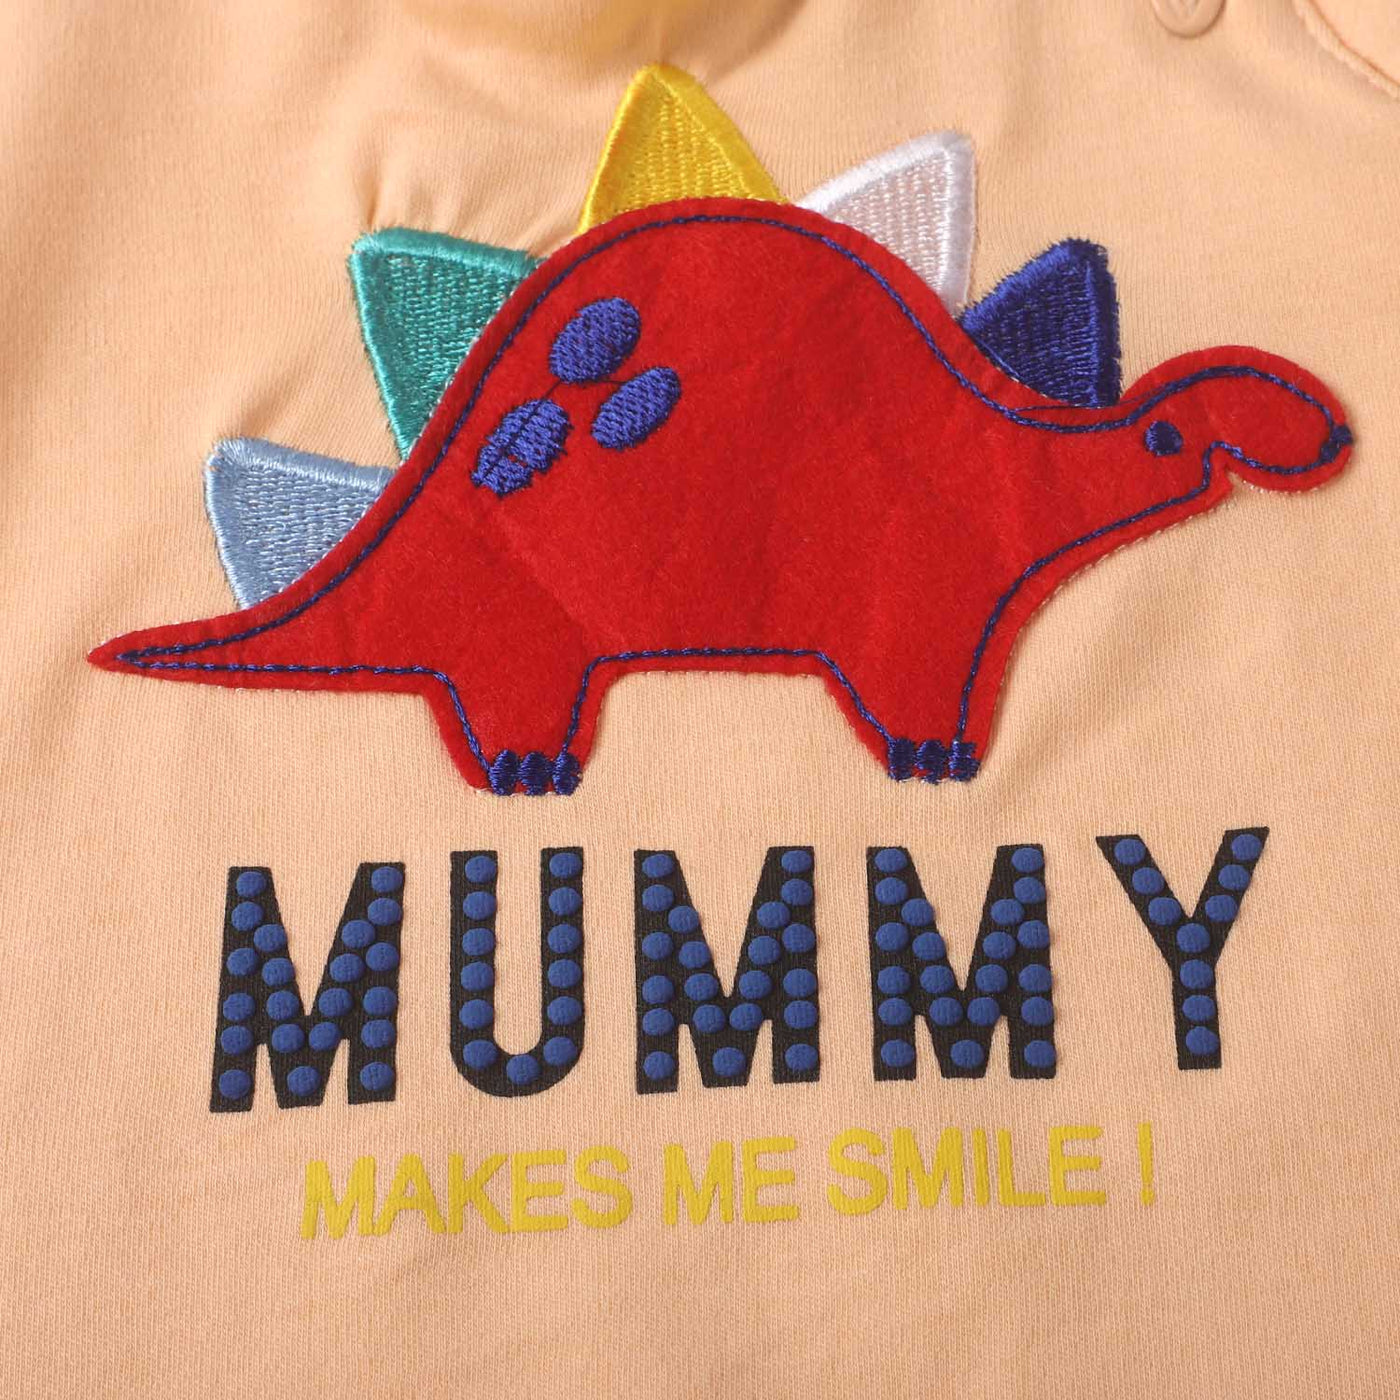 Infant Boys Knitted Romper Mummy - Cream Puff